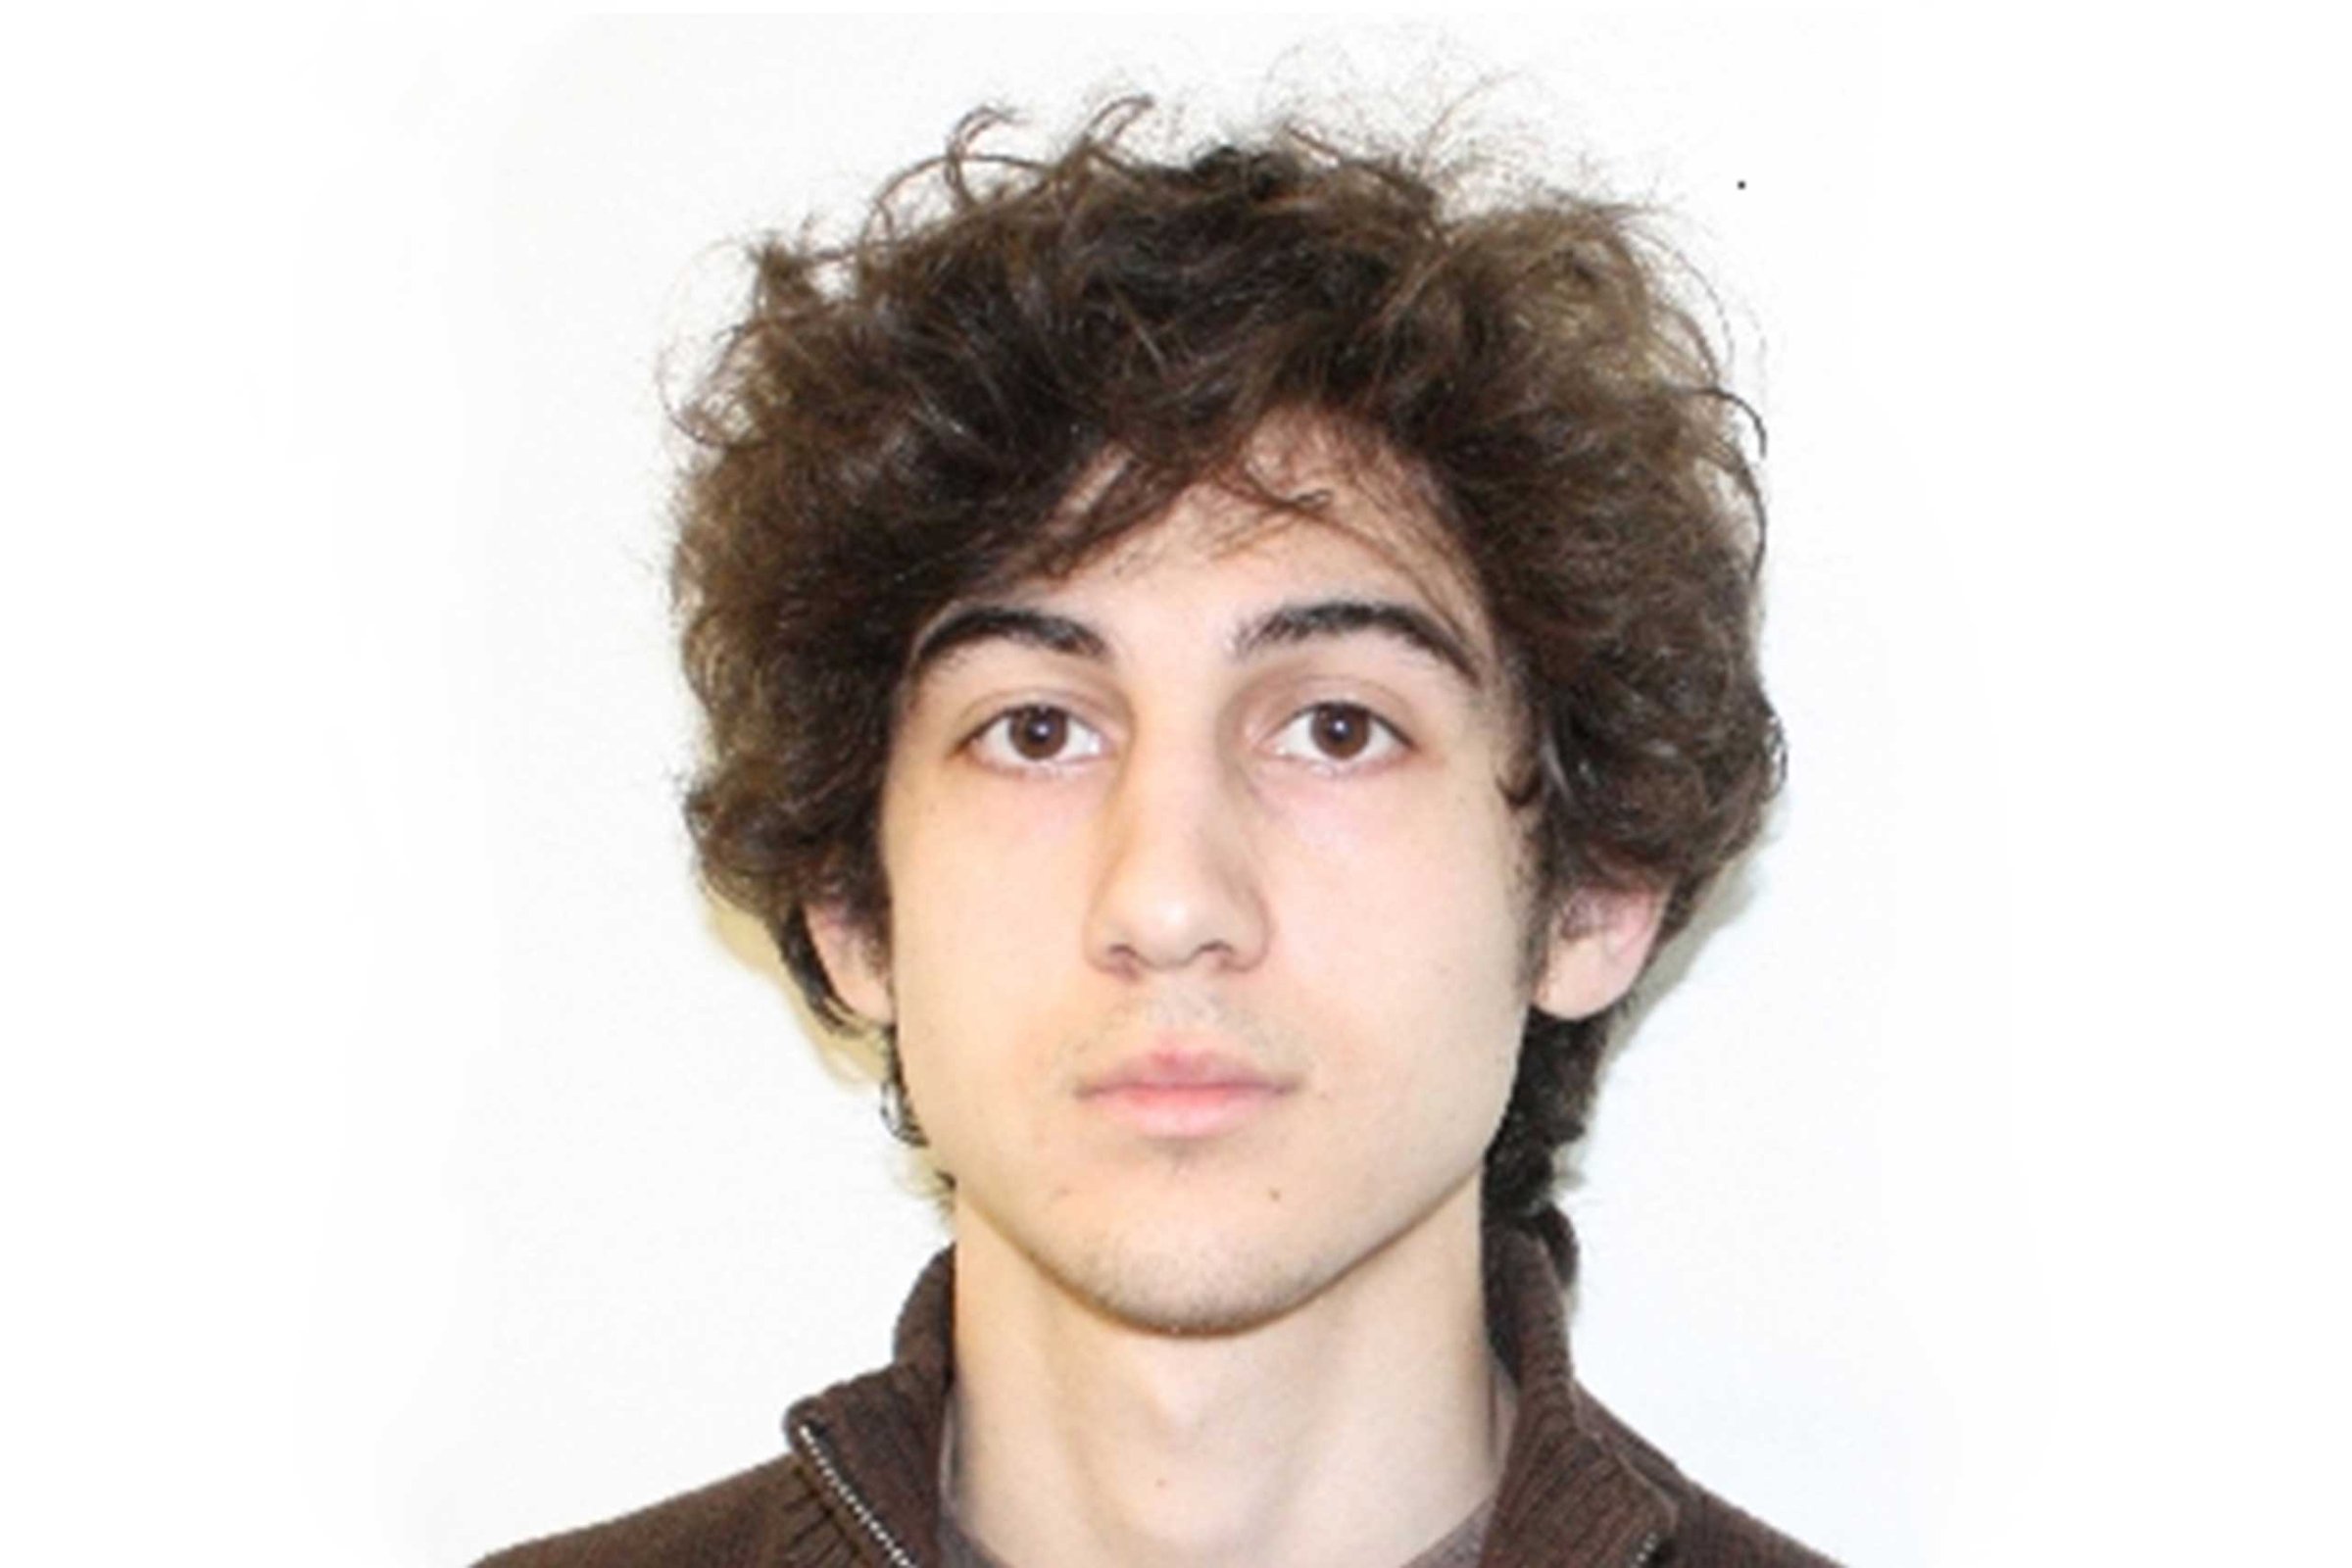 Dzhokhar Tsarnaev, a suspect in the Boston Marathon bombing, photo released on April 19, 2013.